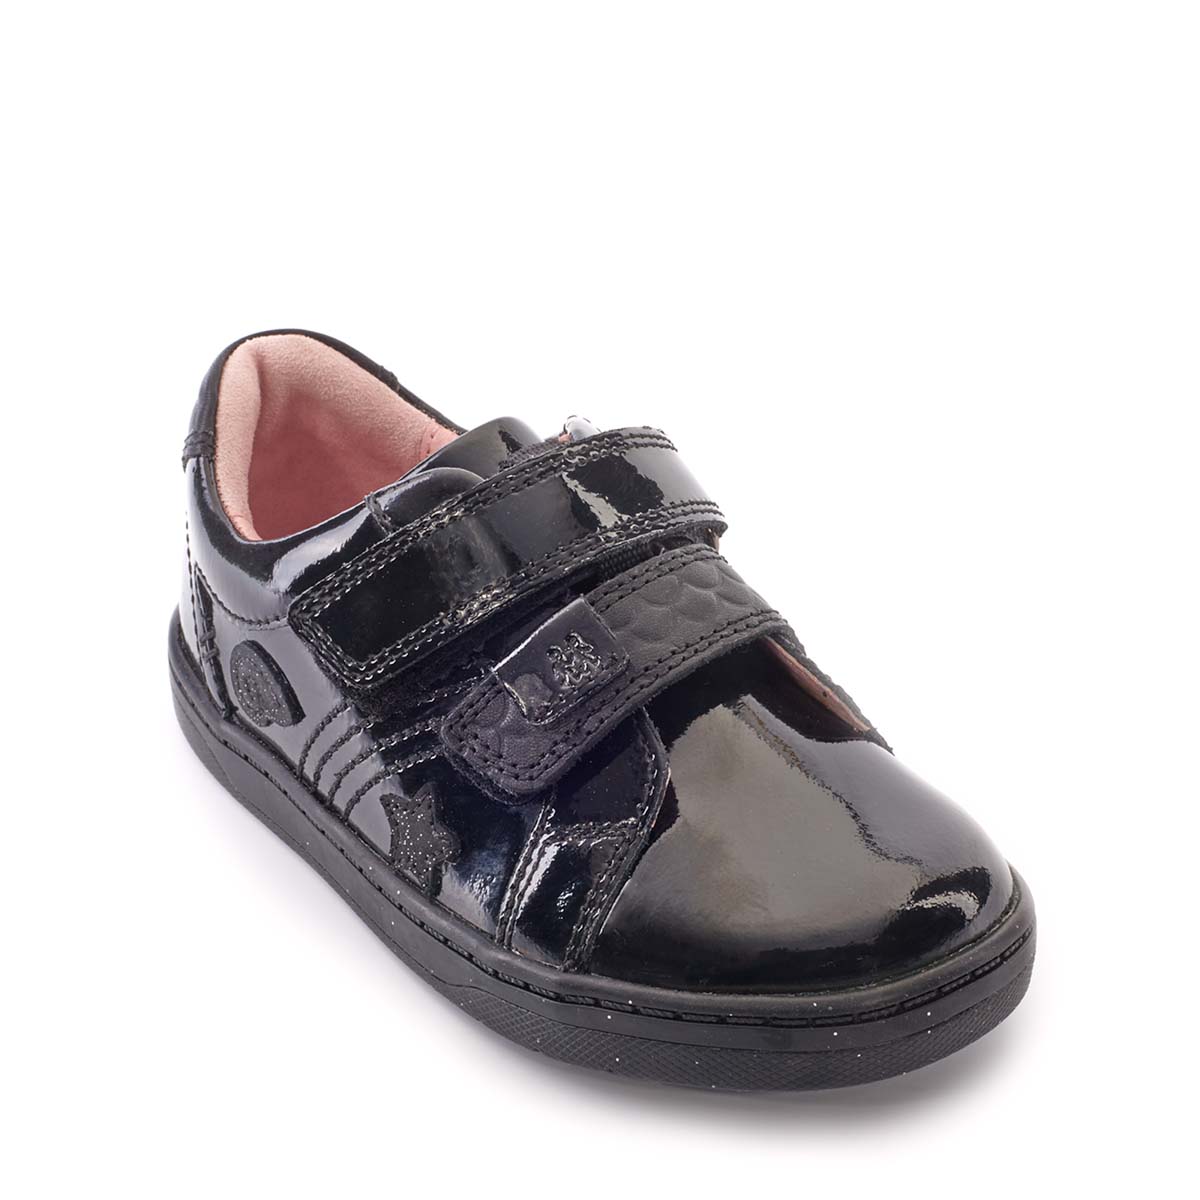 Start Rite - Fantasy In Black Patent 1741-36F In Size 10 In Plain Black Patent For School Girls Shoes  In Black Patent For kids